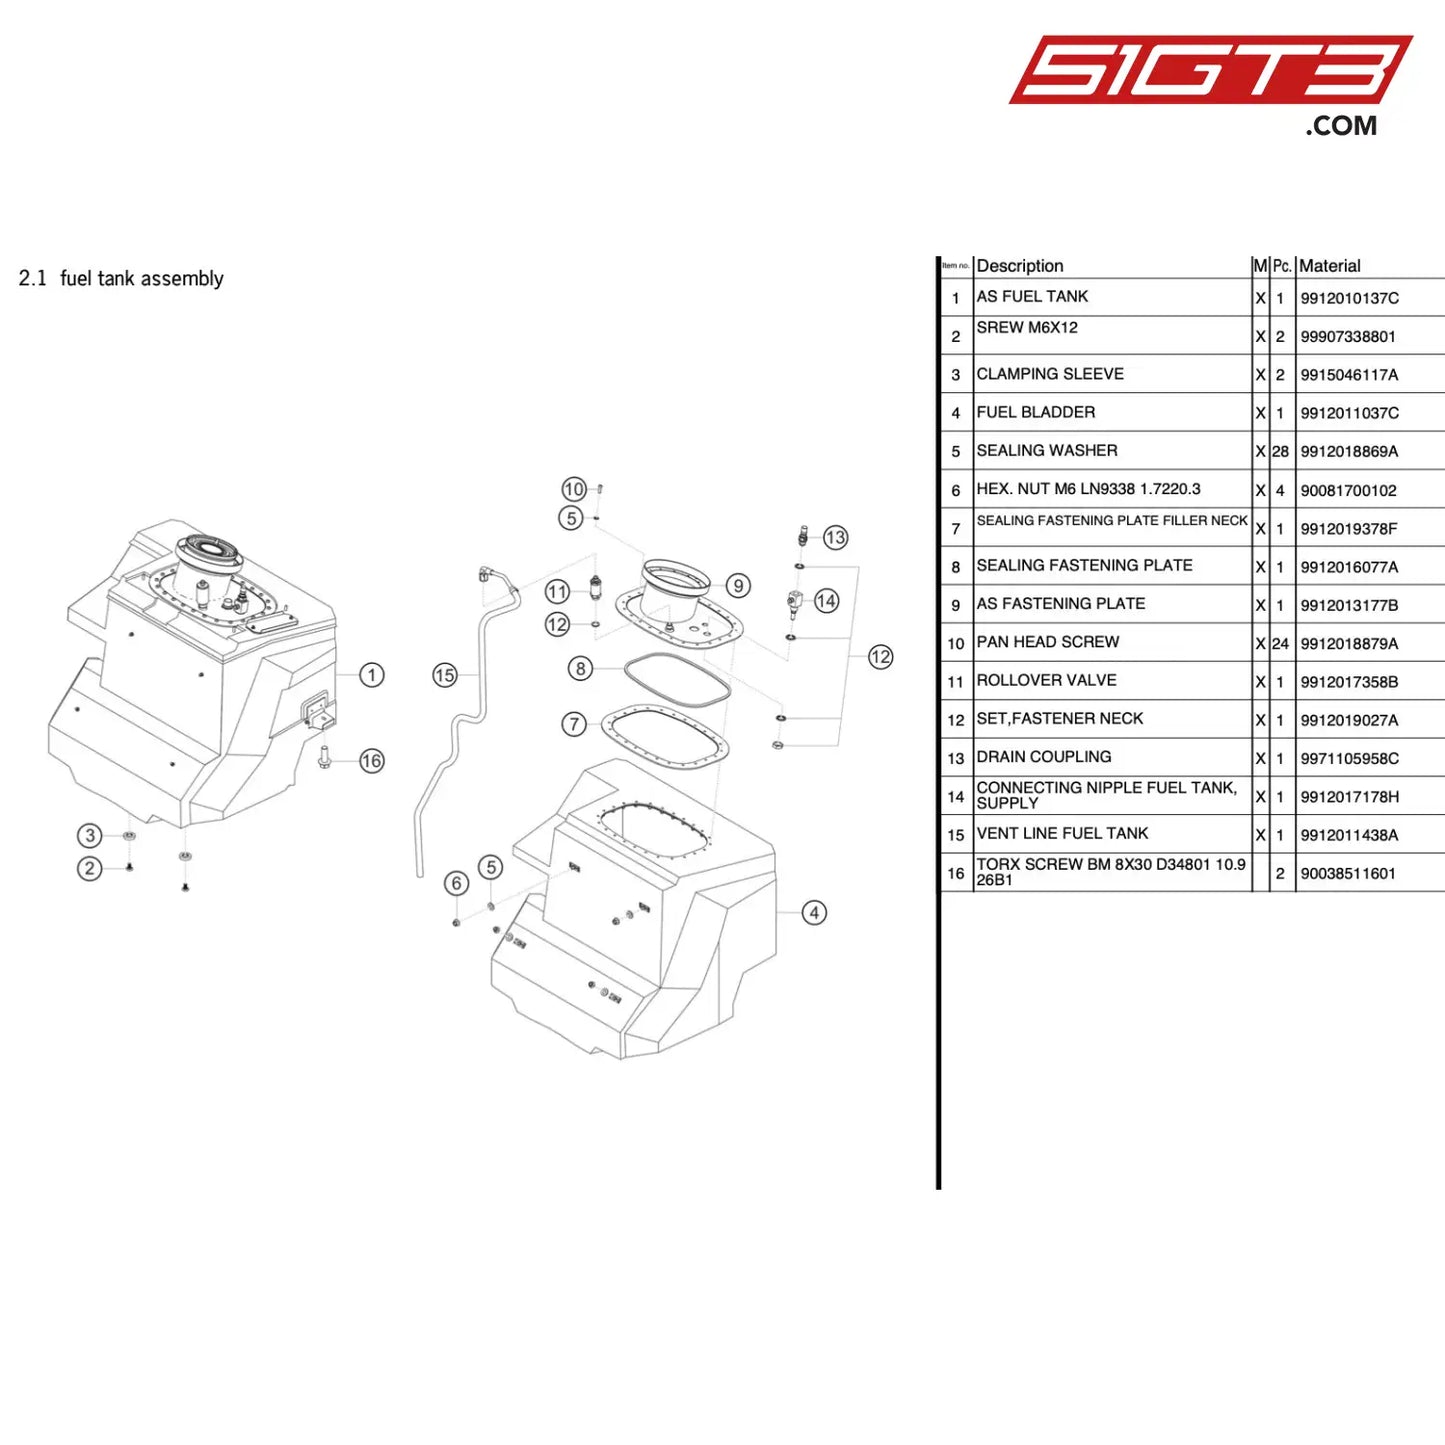 Drain Coupling - 9971105958C [Porsche 911 Gt3 R Type 991 (Gen 1)] Fuel Tank Assembly